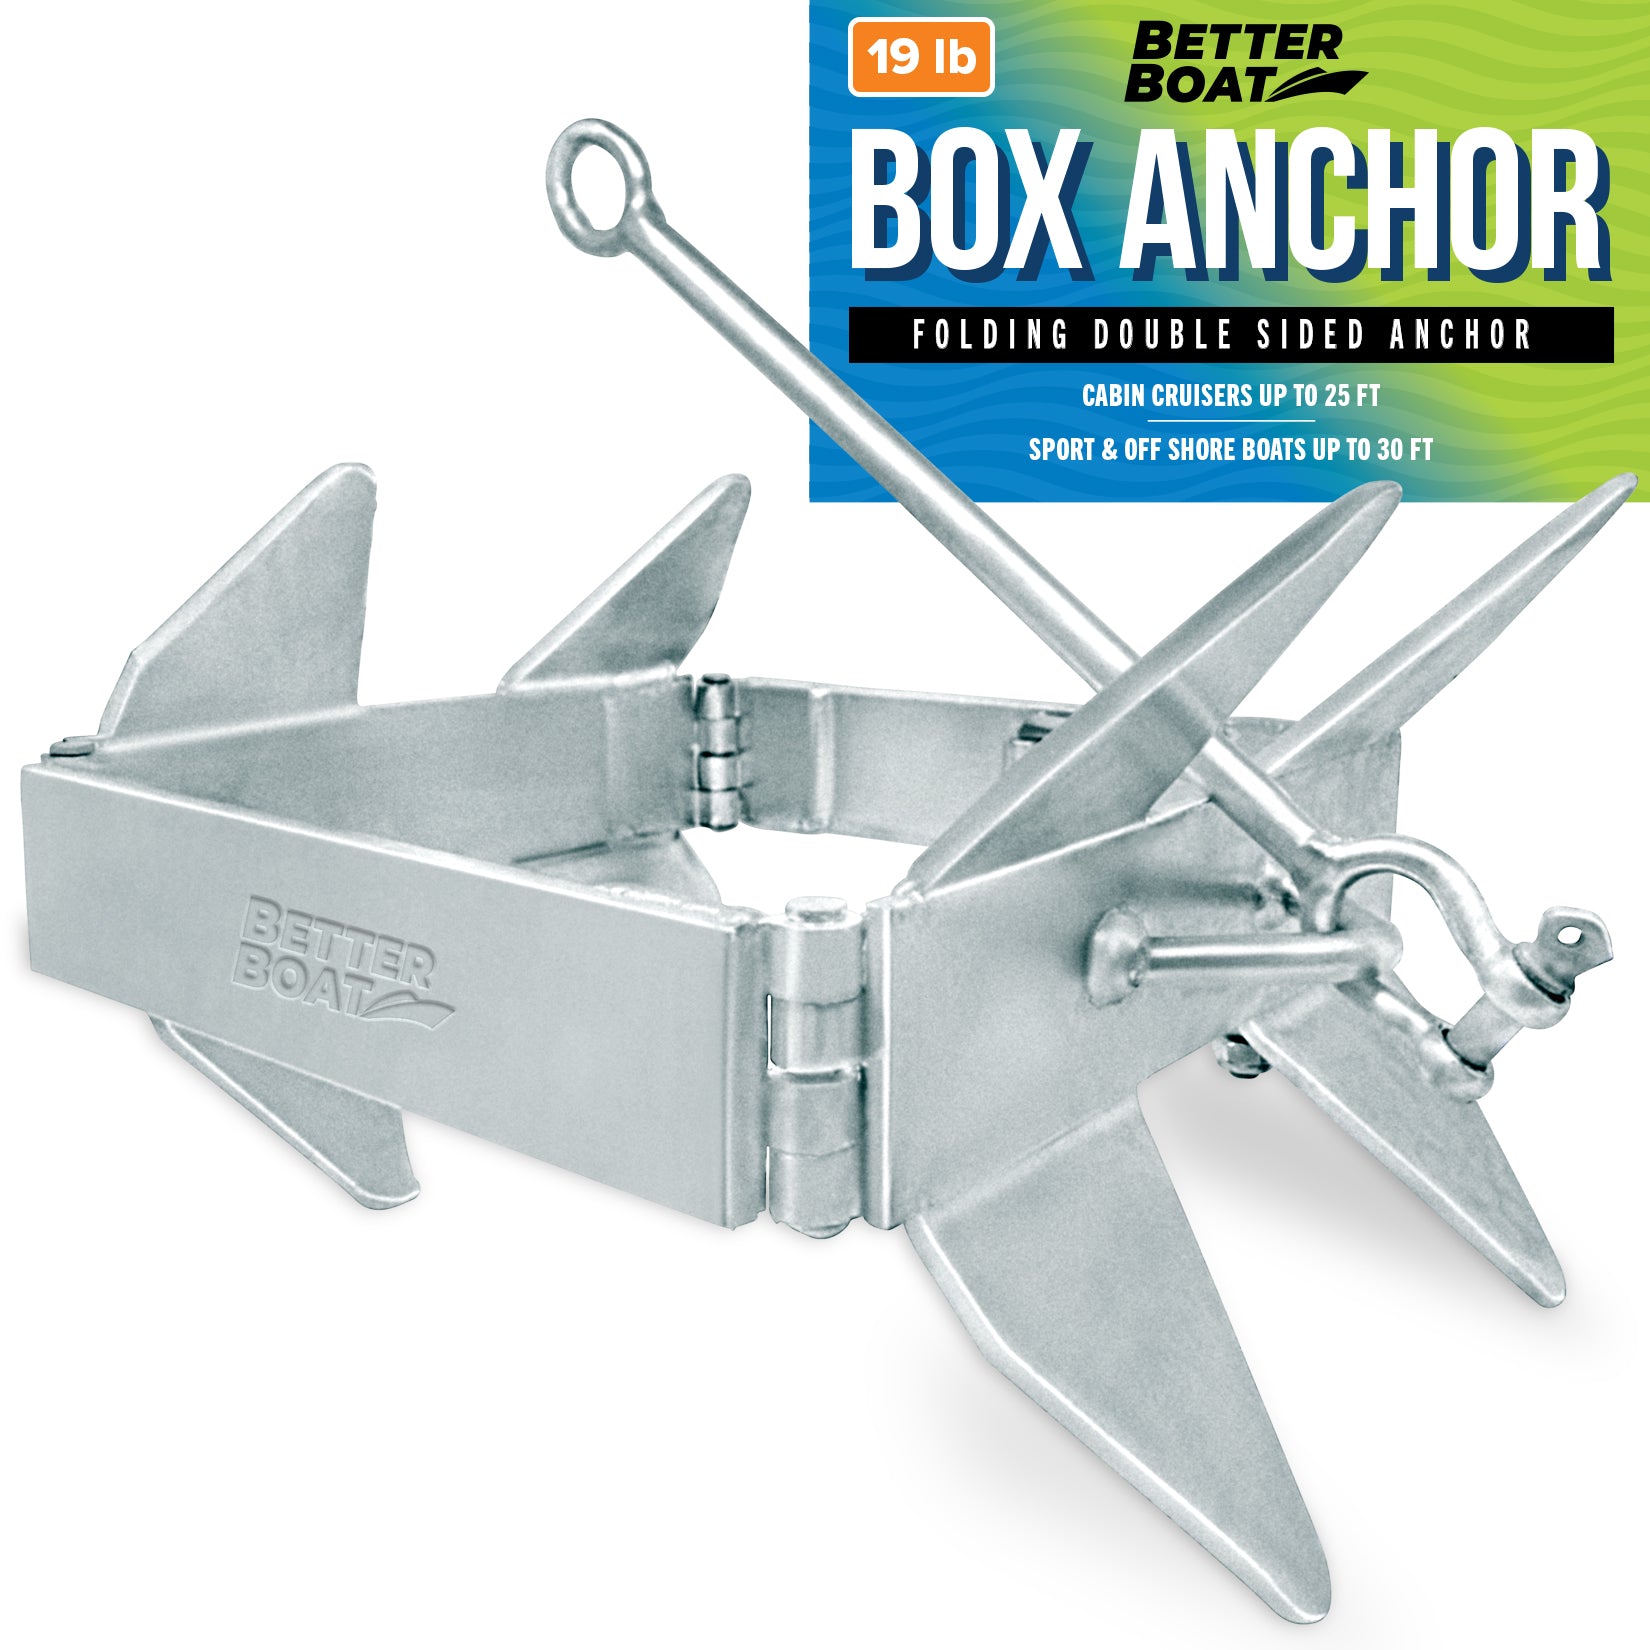 Box Anchor for Boats Folding Anchor - 19 lbs